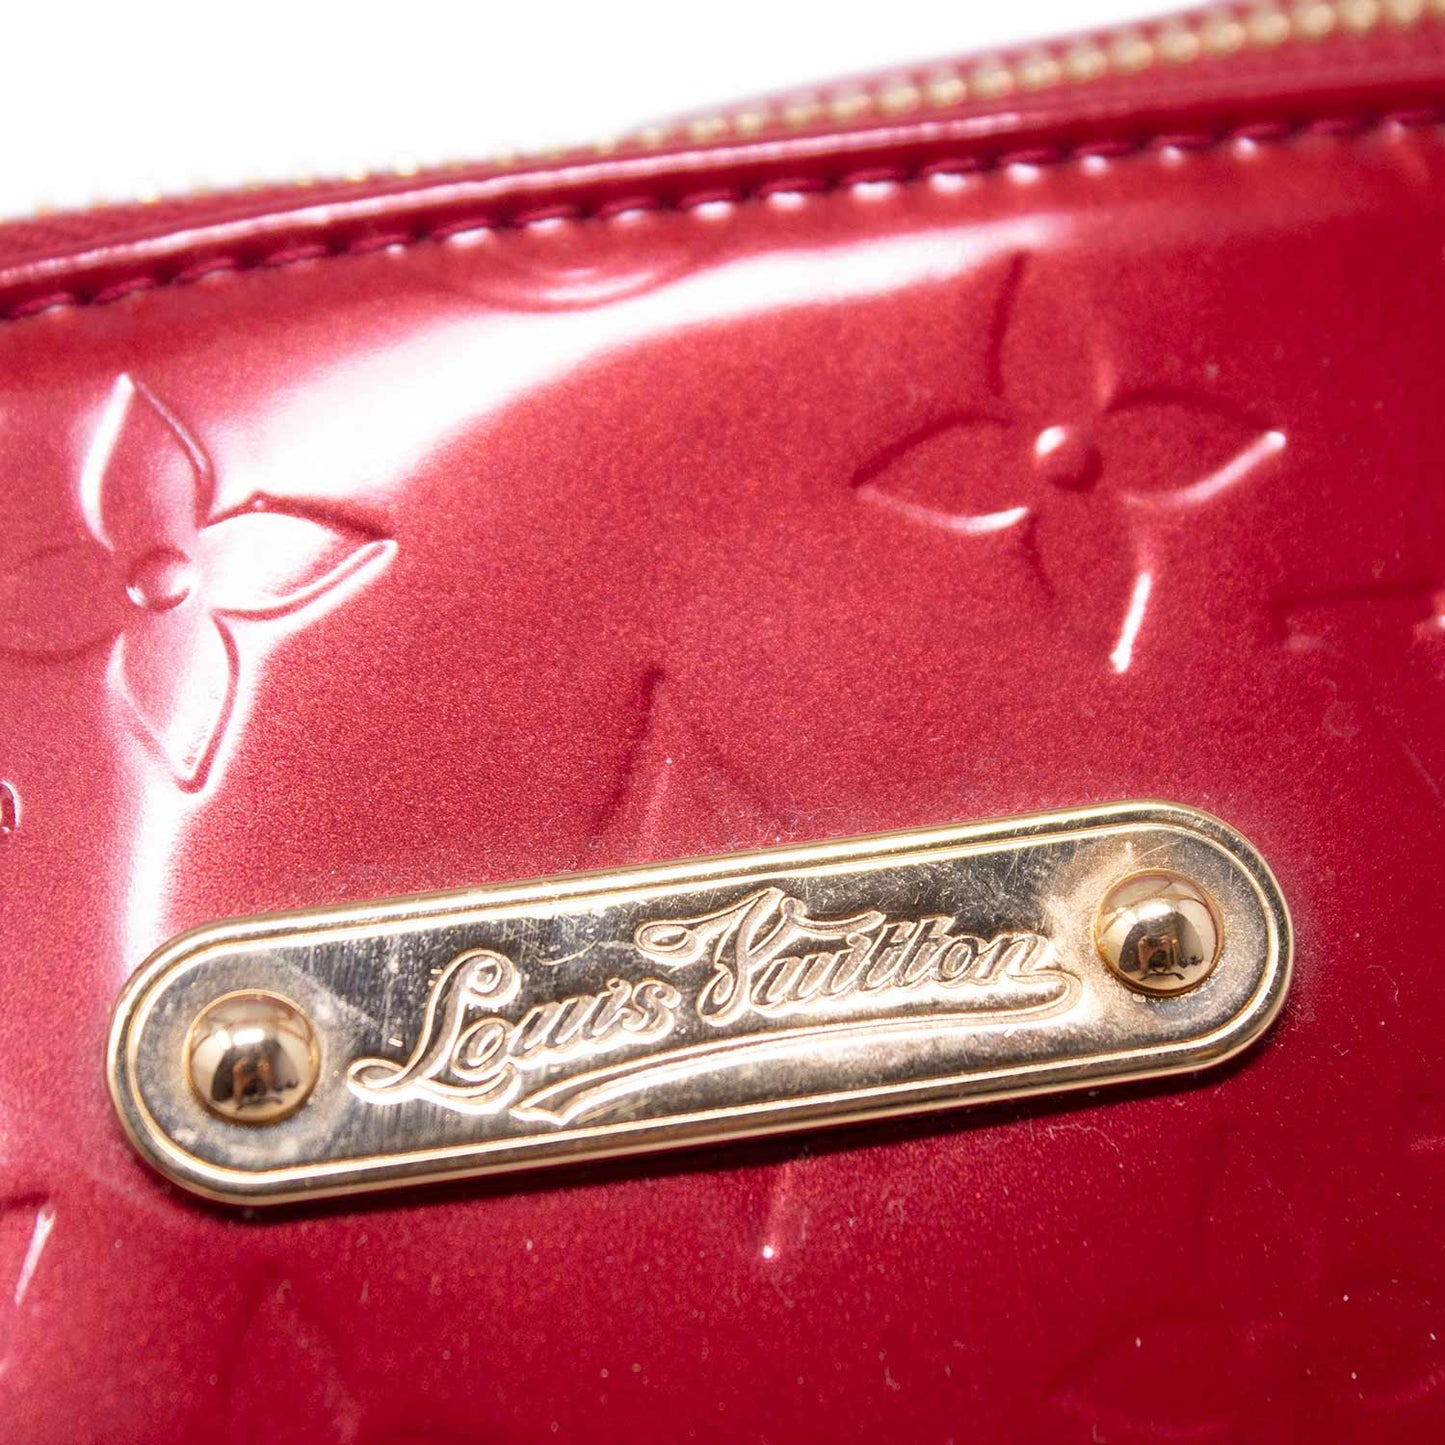 Louis Vuitton Bellevue Pm Vernice Rossa